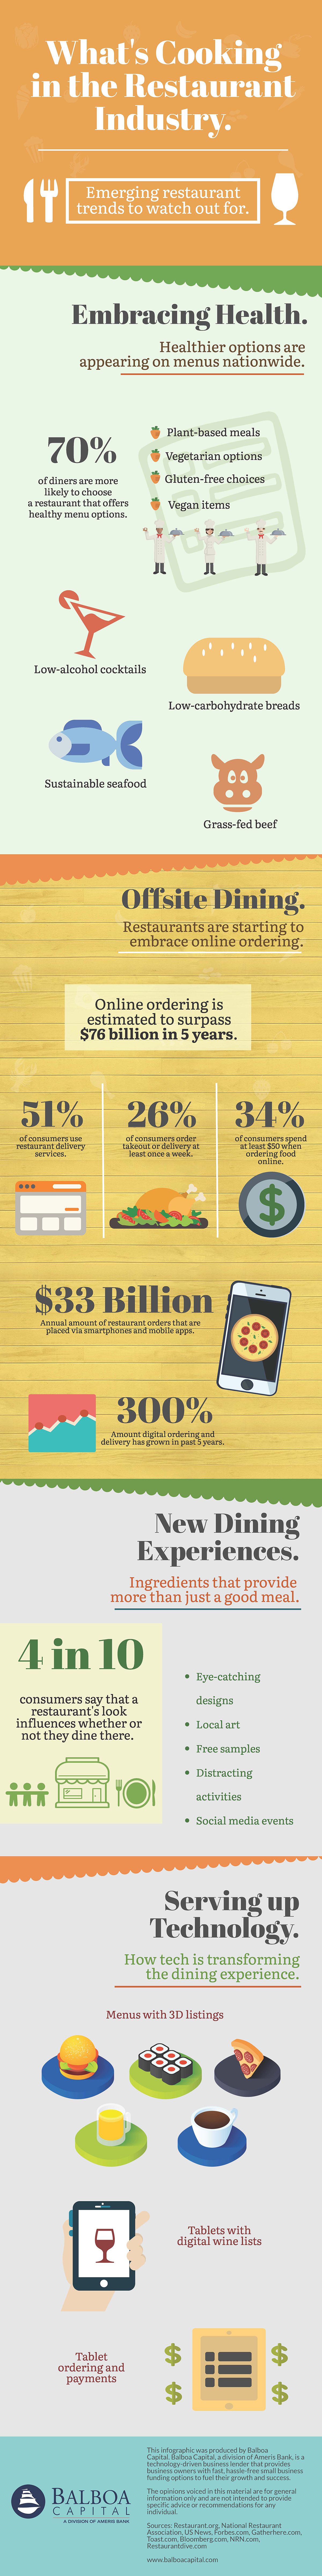 Restaurant Trends Infographic